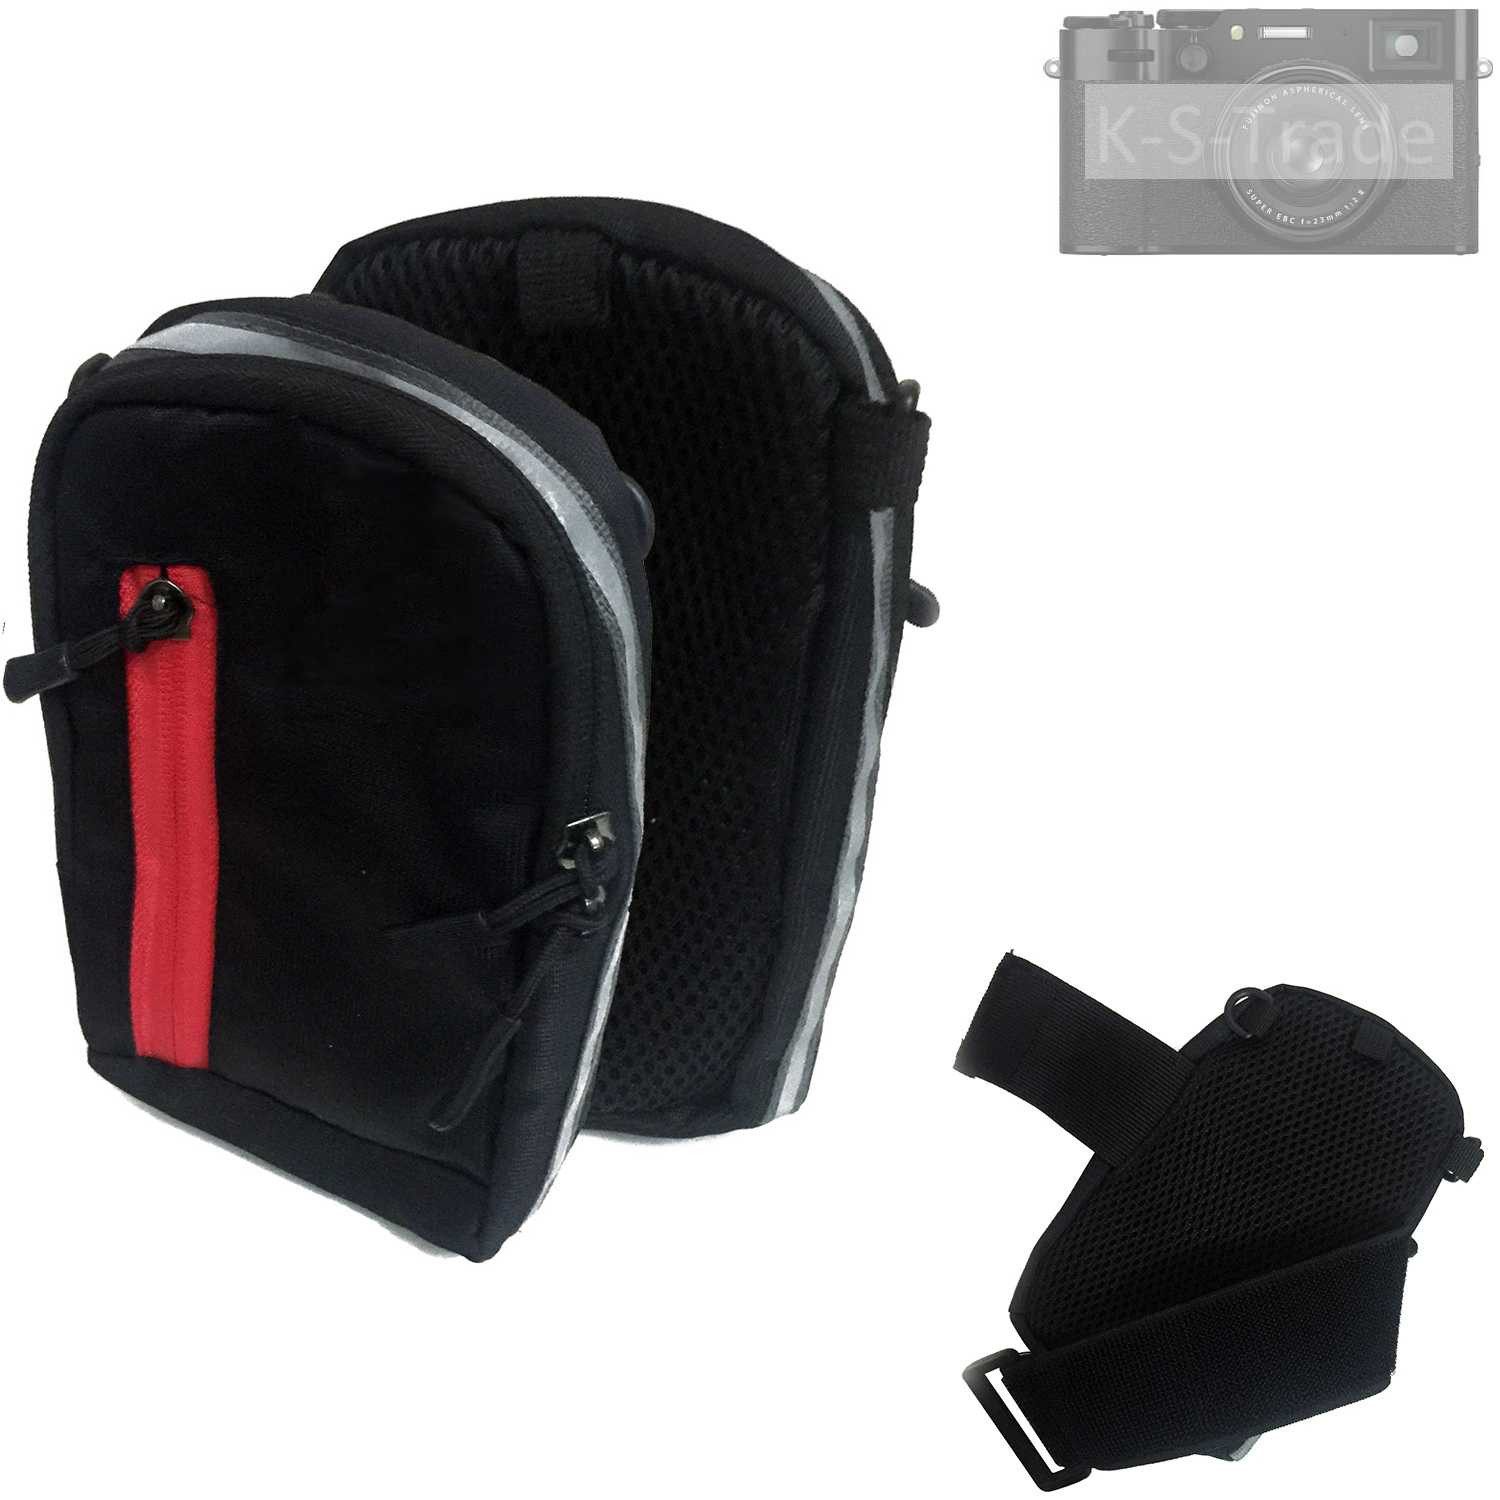 K-S-Trade Kameratasche für Fujifilm X100VI, Fototasche Kameratasche Gürteltasche Schutz Hülle Case bag